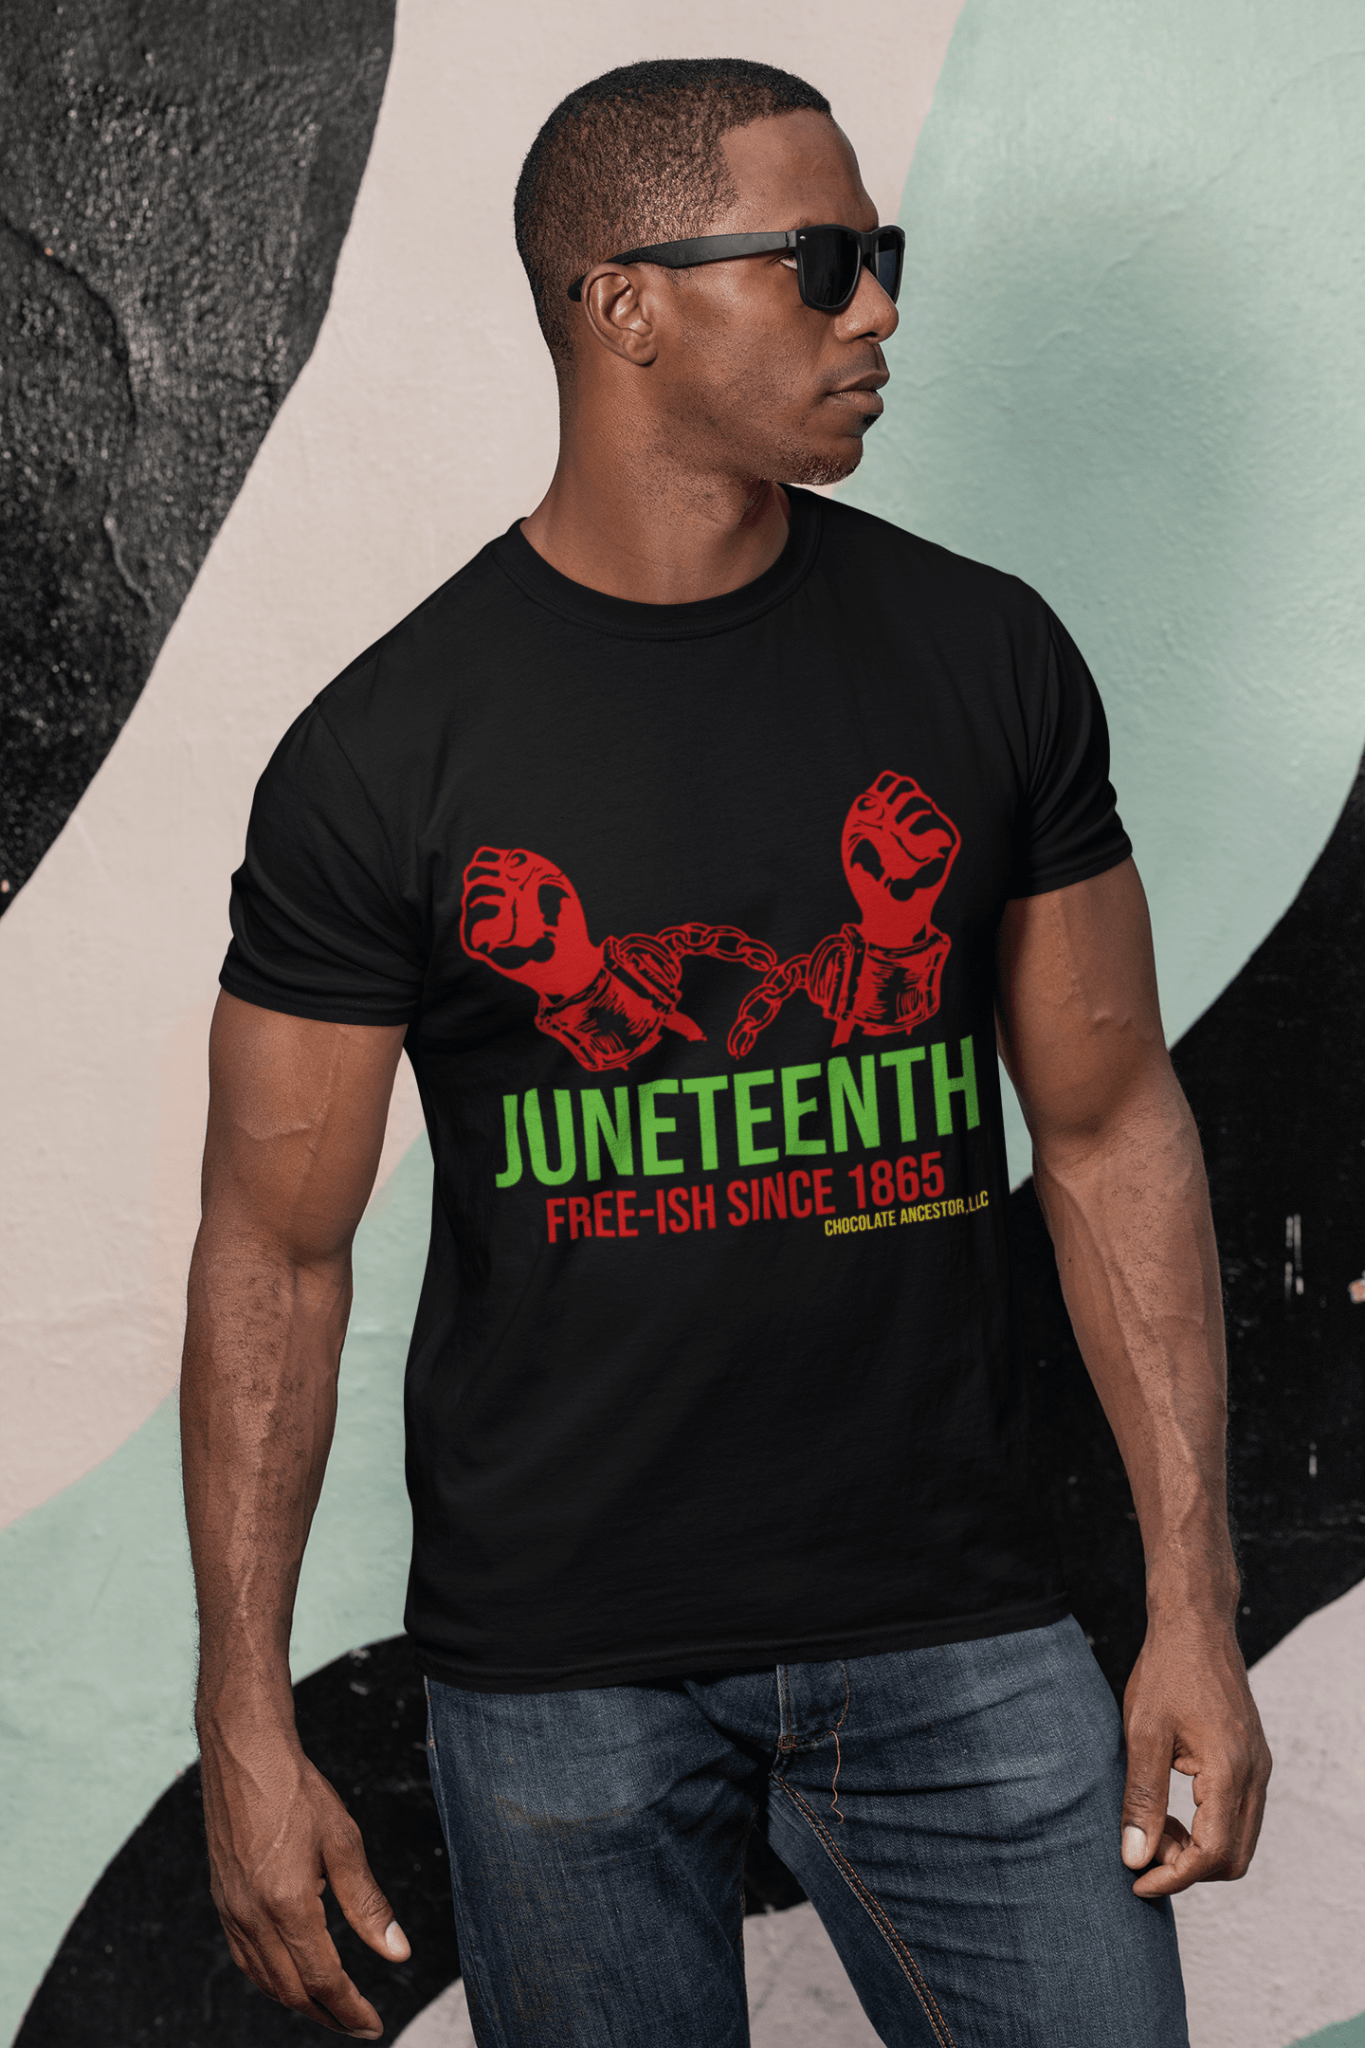 Juneteenth Free-ish Since 1865 Short-Sleeve Unisex T-Shirt – Chocolate ...